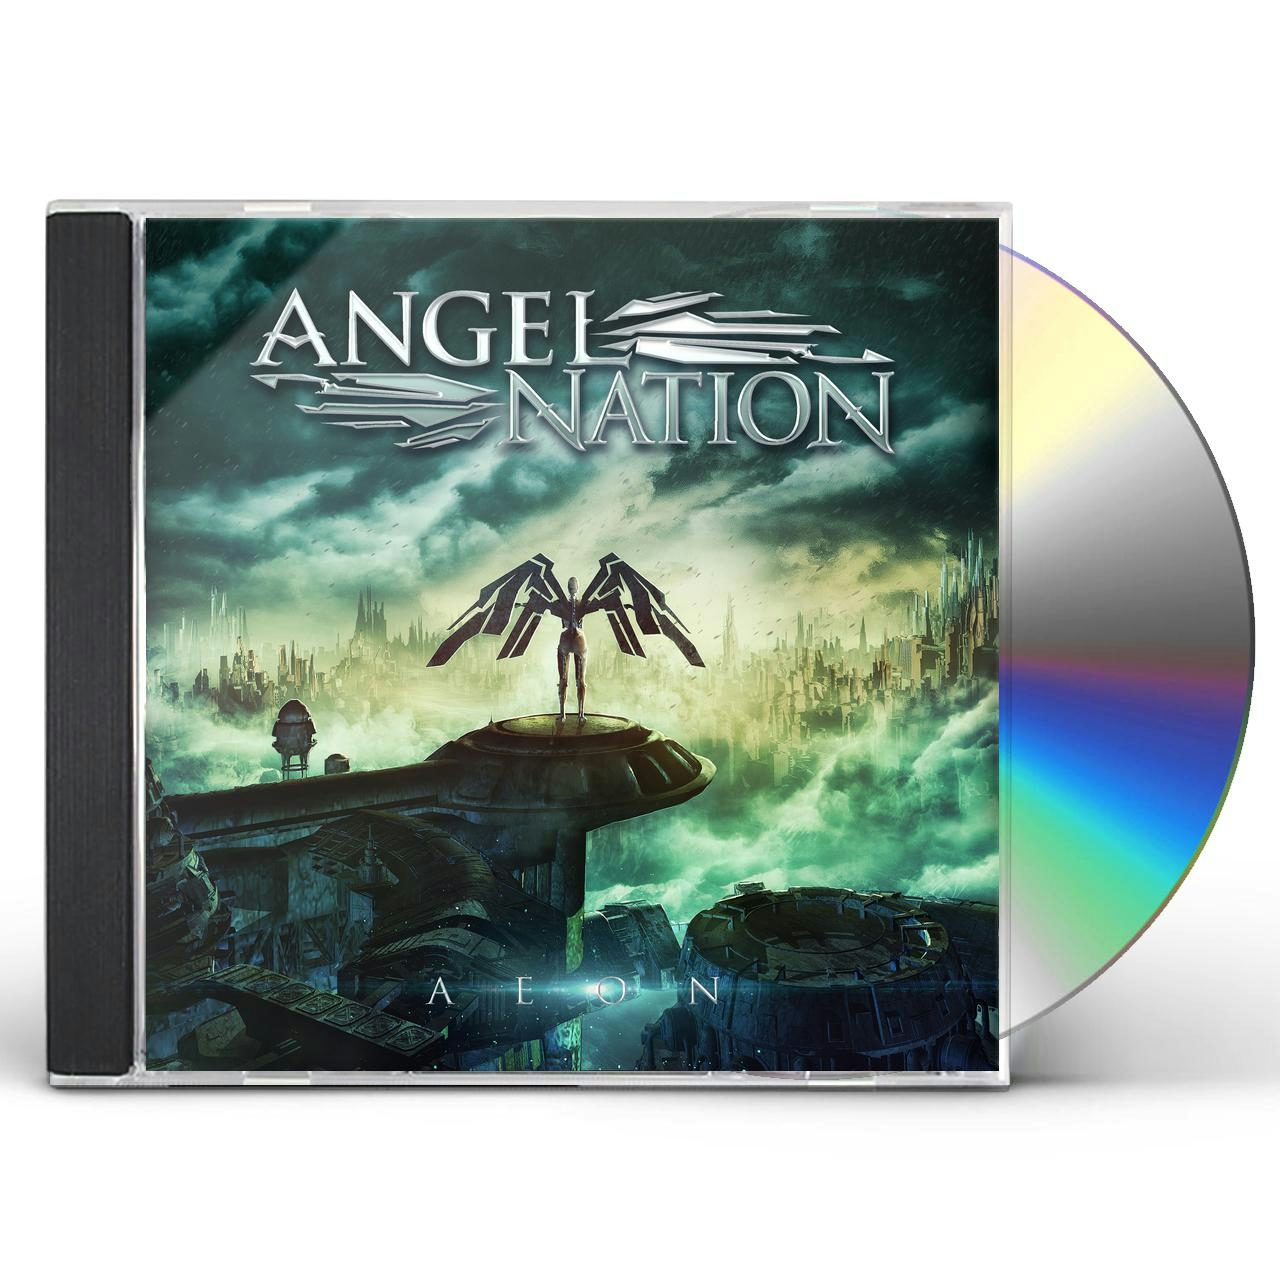 Angel Nation AEON CD $10.99$9.99